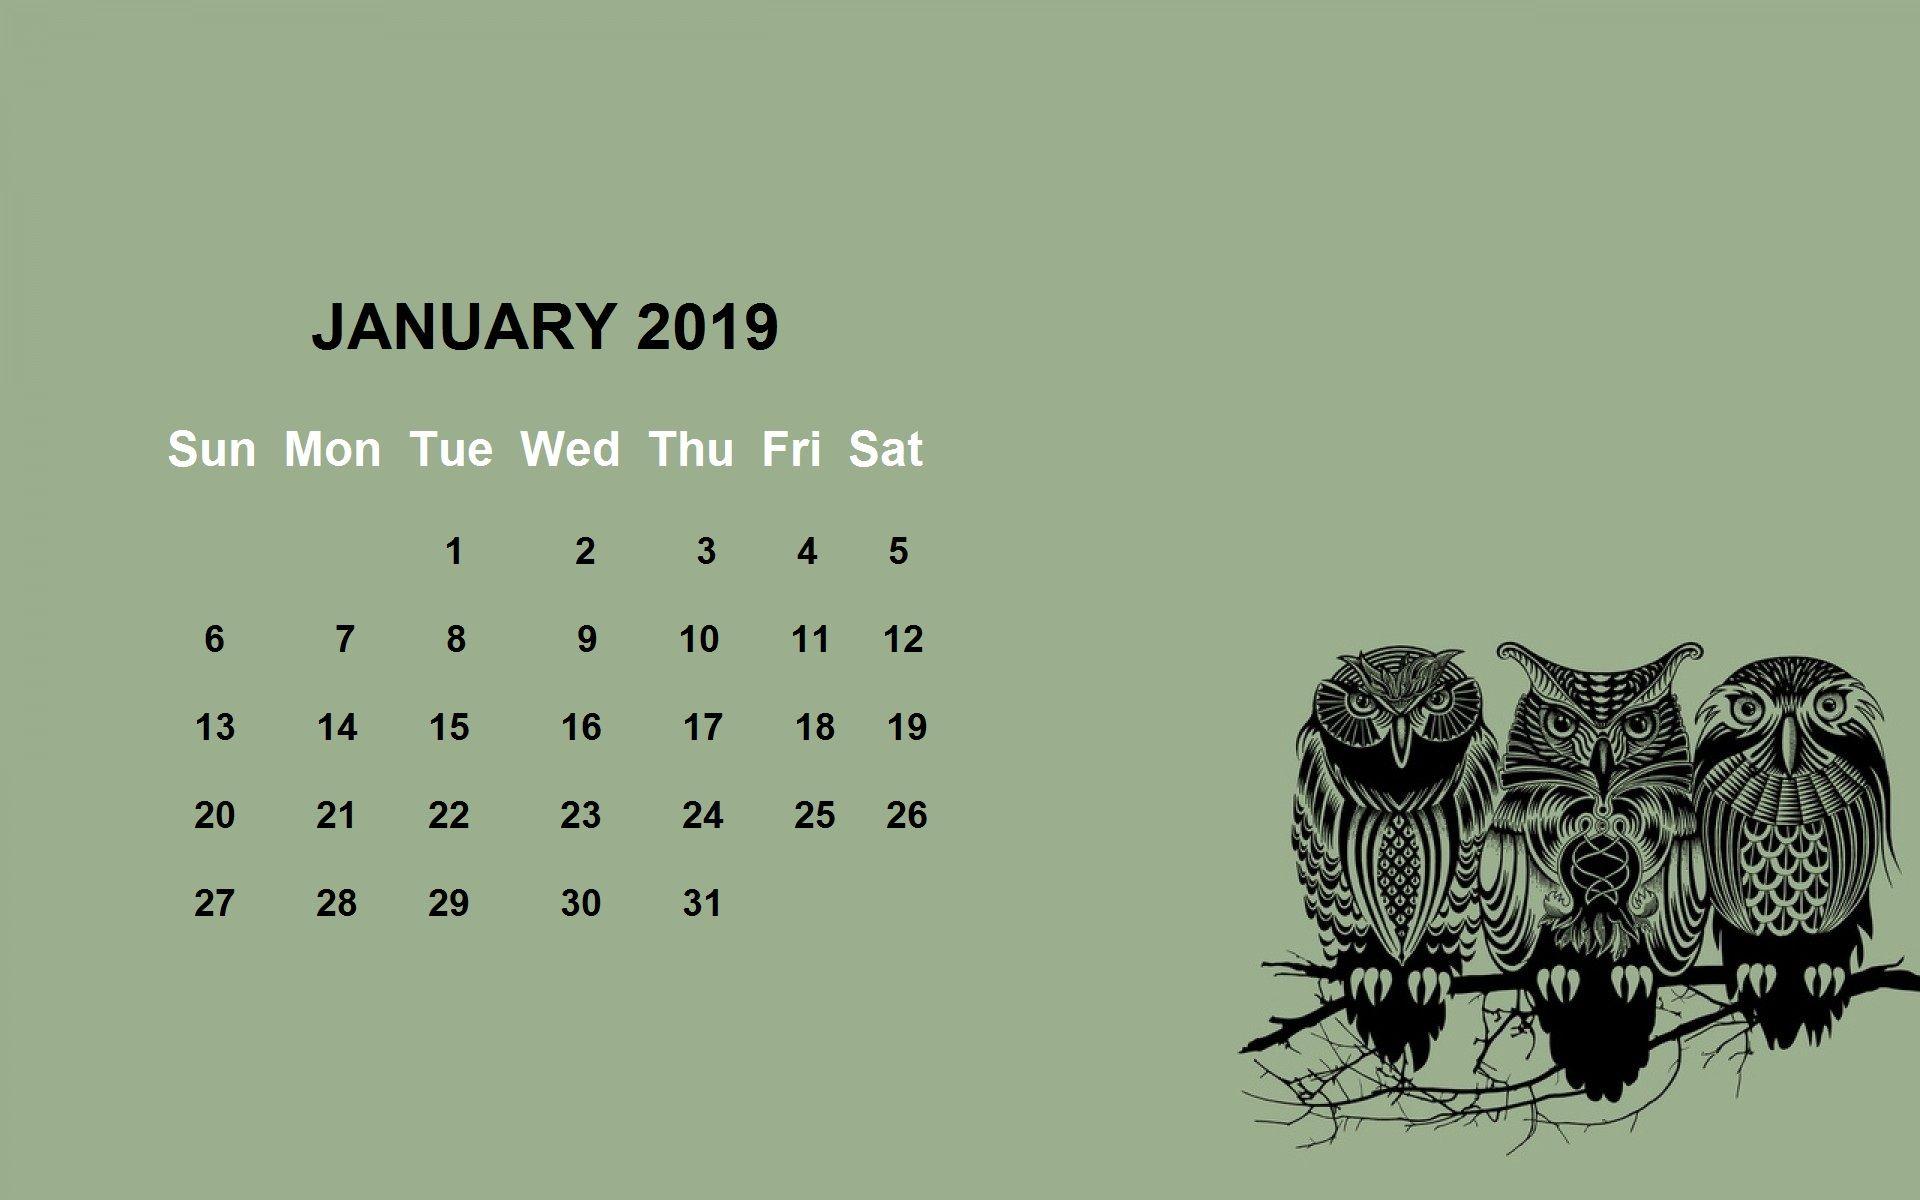 January 2019 Desktop Background Wallpaper